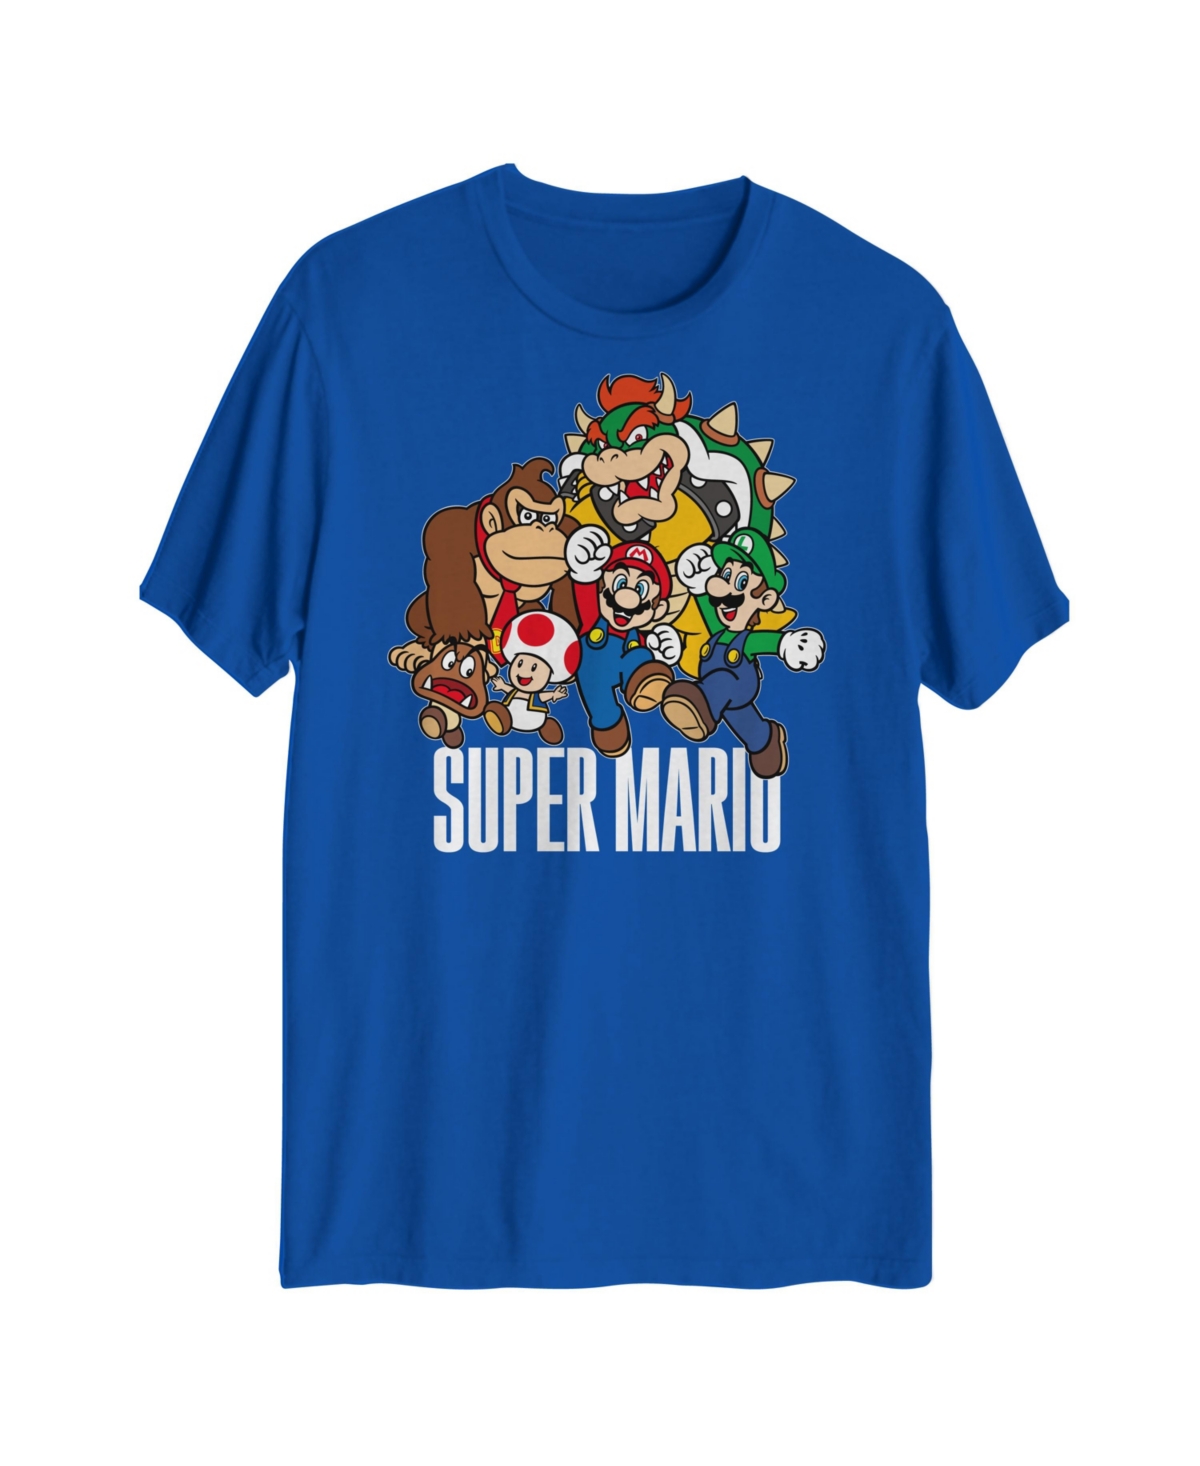 Super Mario Group Men's Graphic T-Shirt - Royal